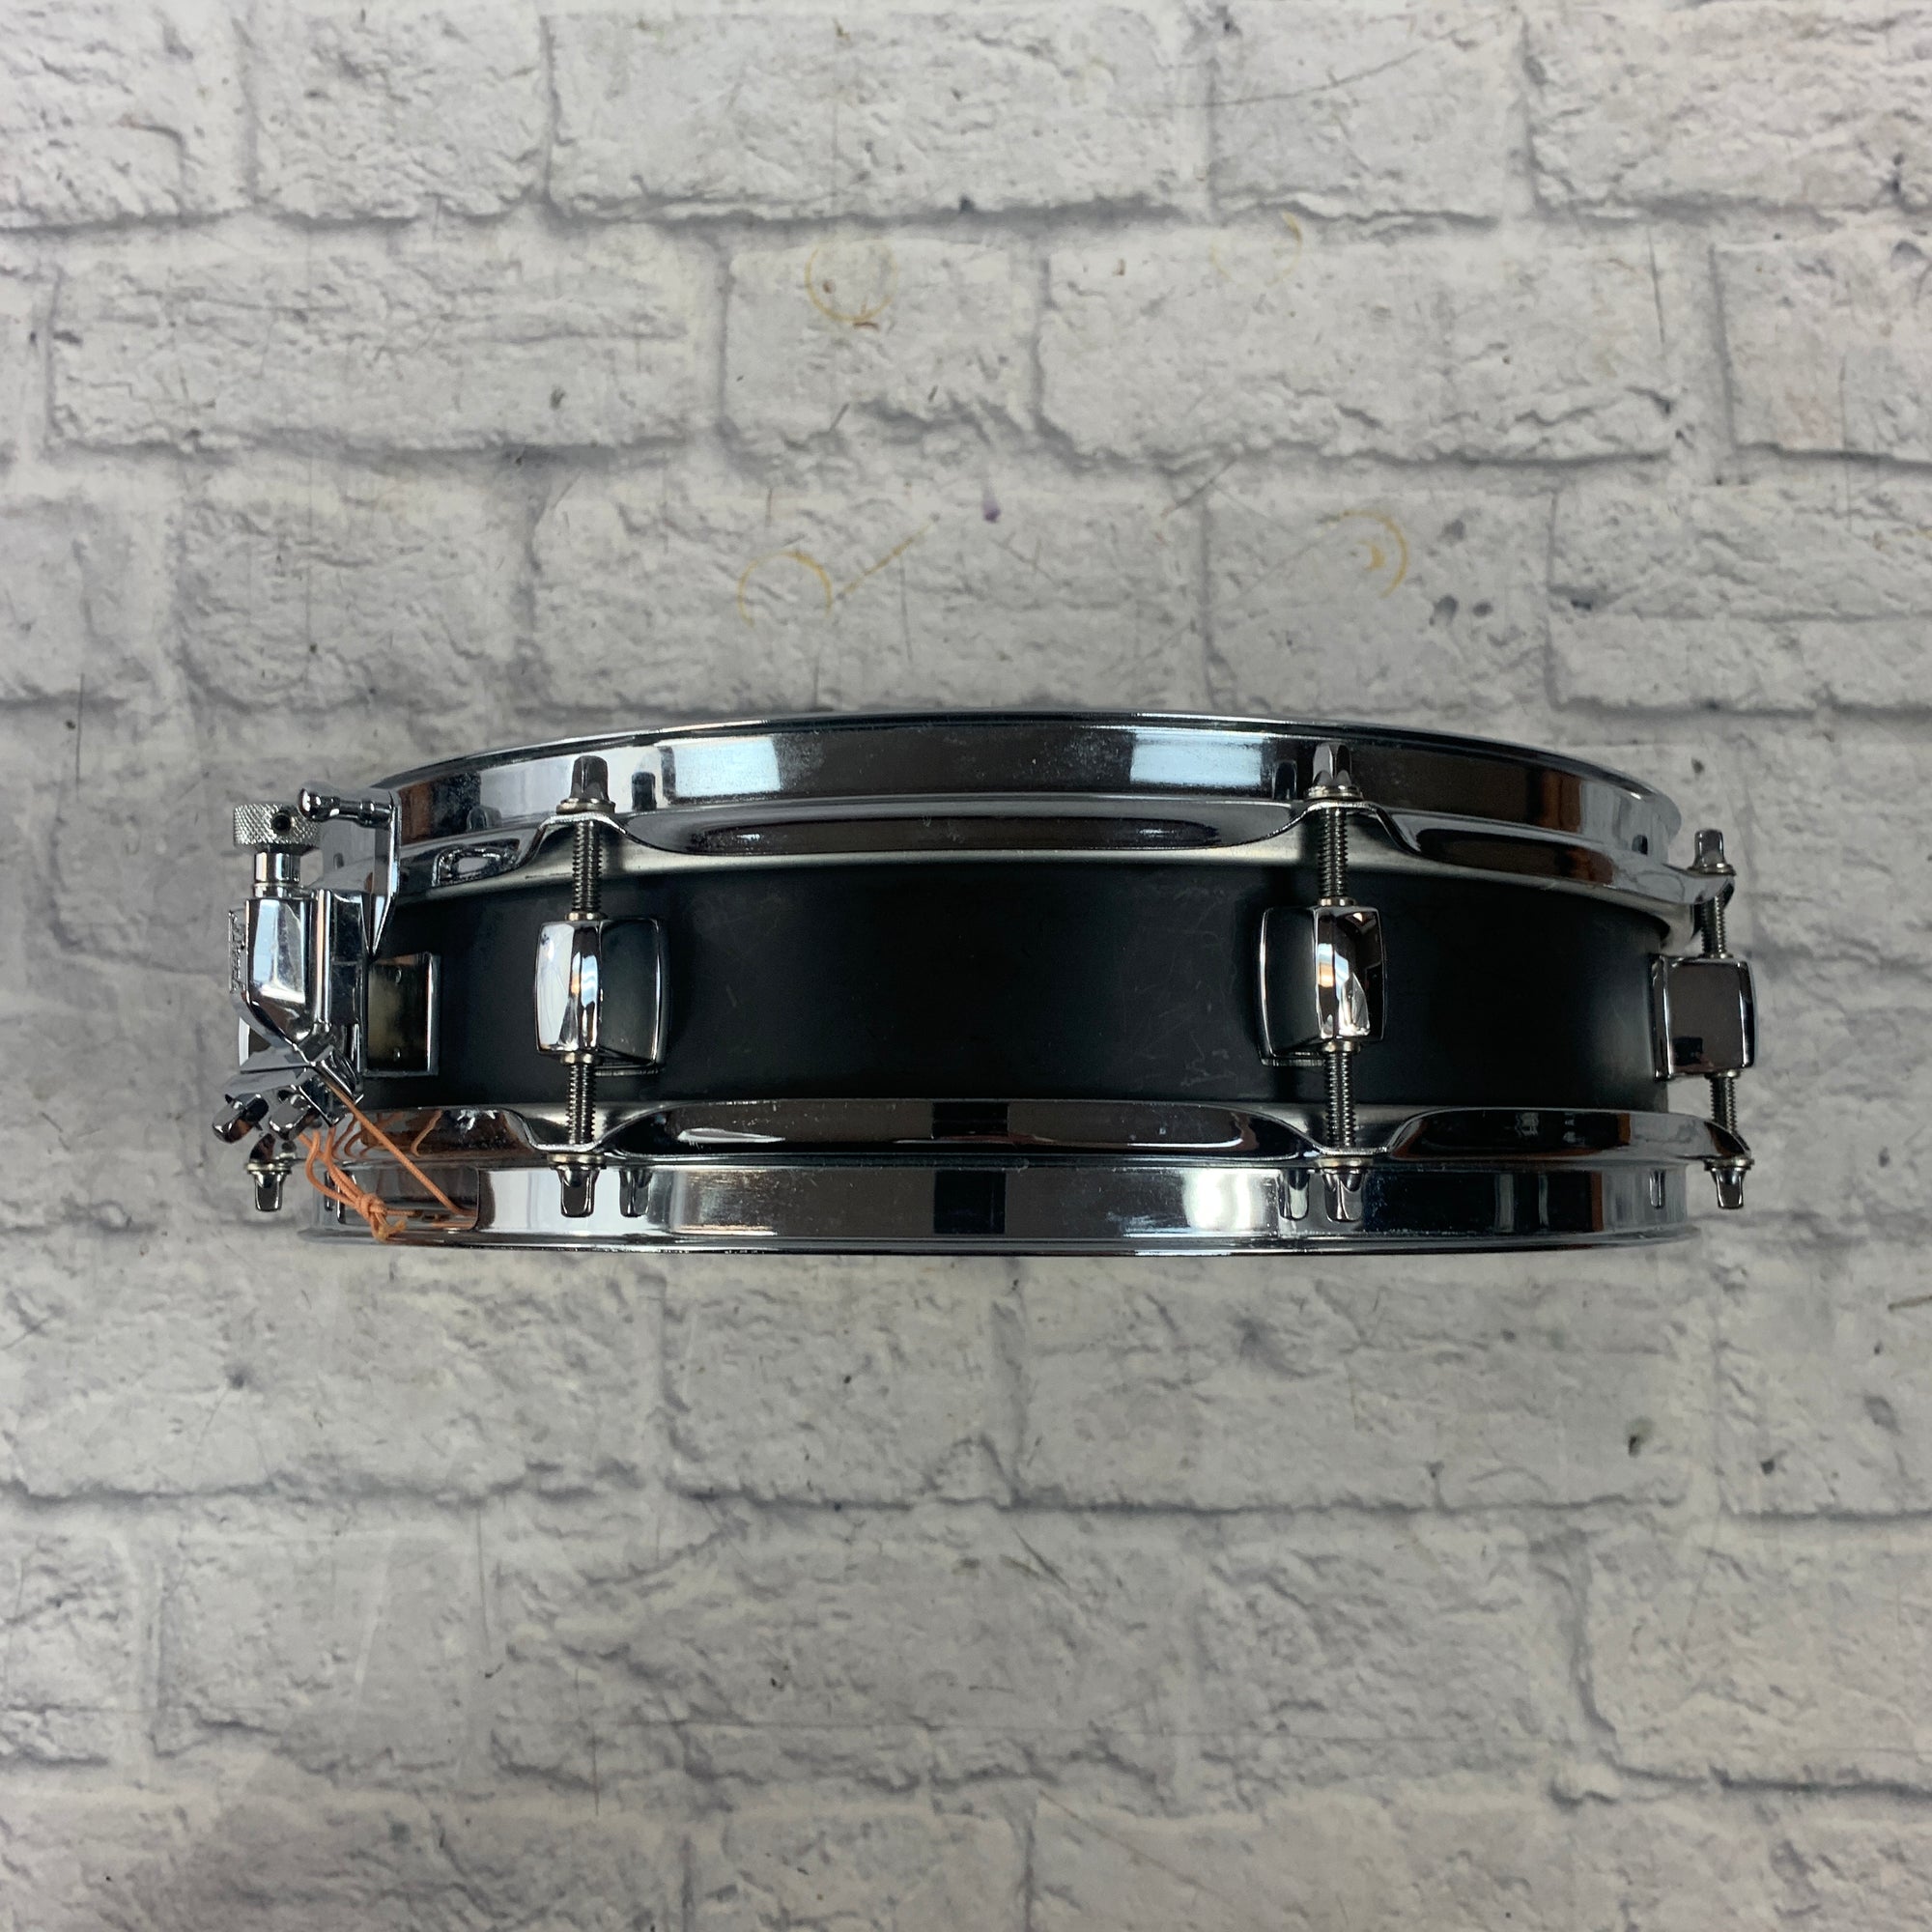 Pearl Steel Piccolo Snare Drum 13x3 Black - Woodbury Music Shop